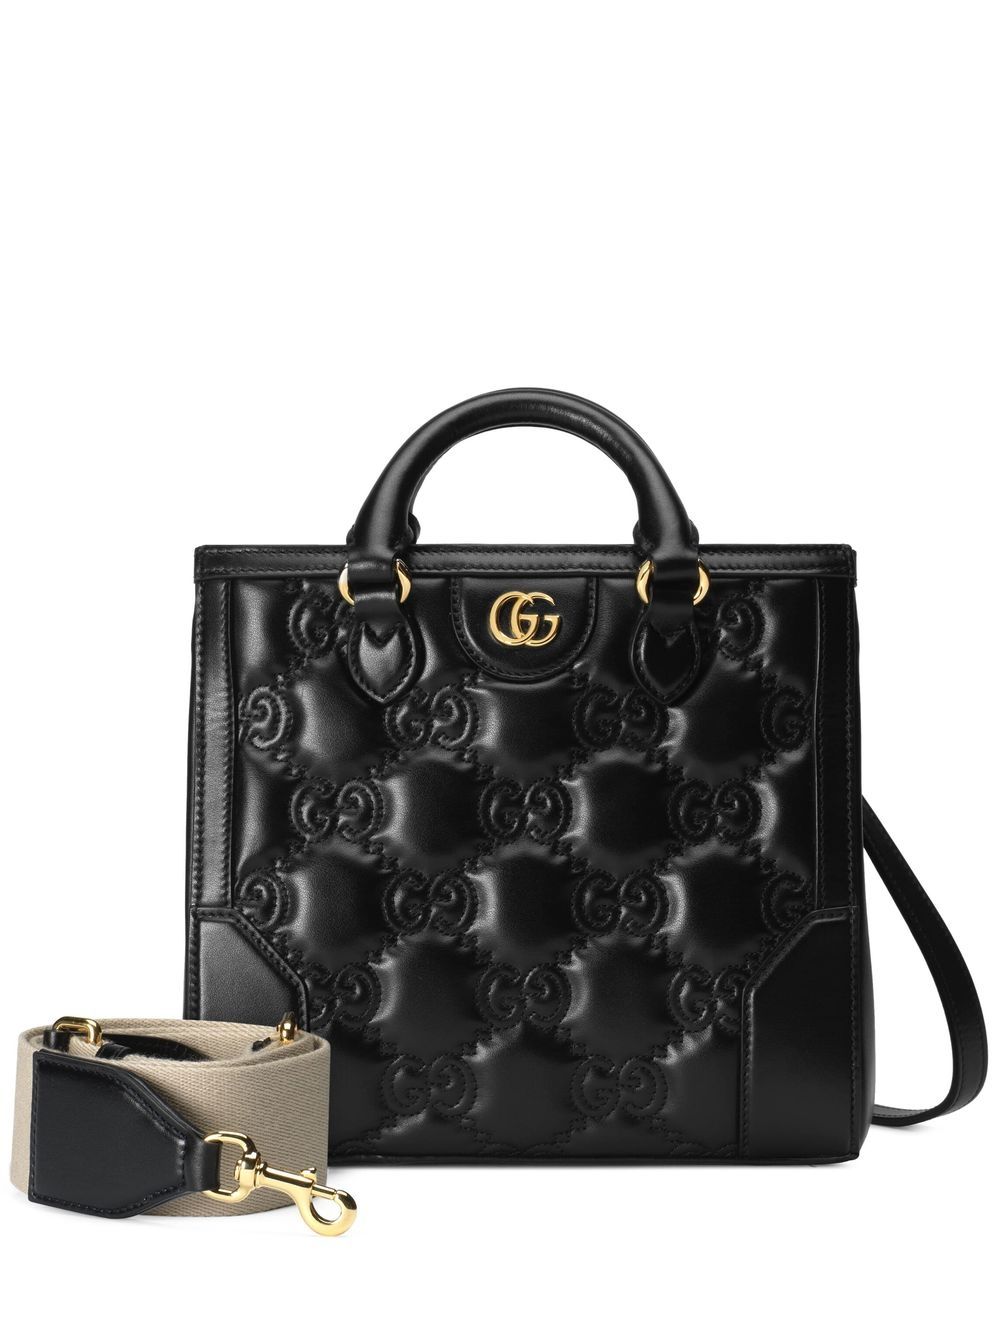  Gucci GG logo-Embossed Mini Tote Bag | Buy Gucci GG logo-Embossed Mini Tote Bag Online | Where To Buy Gucci GG logo-Embossed Mini Tote Bag